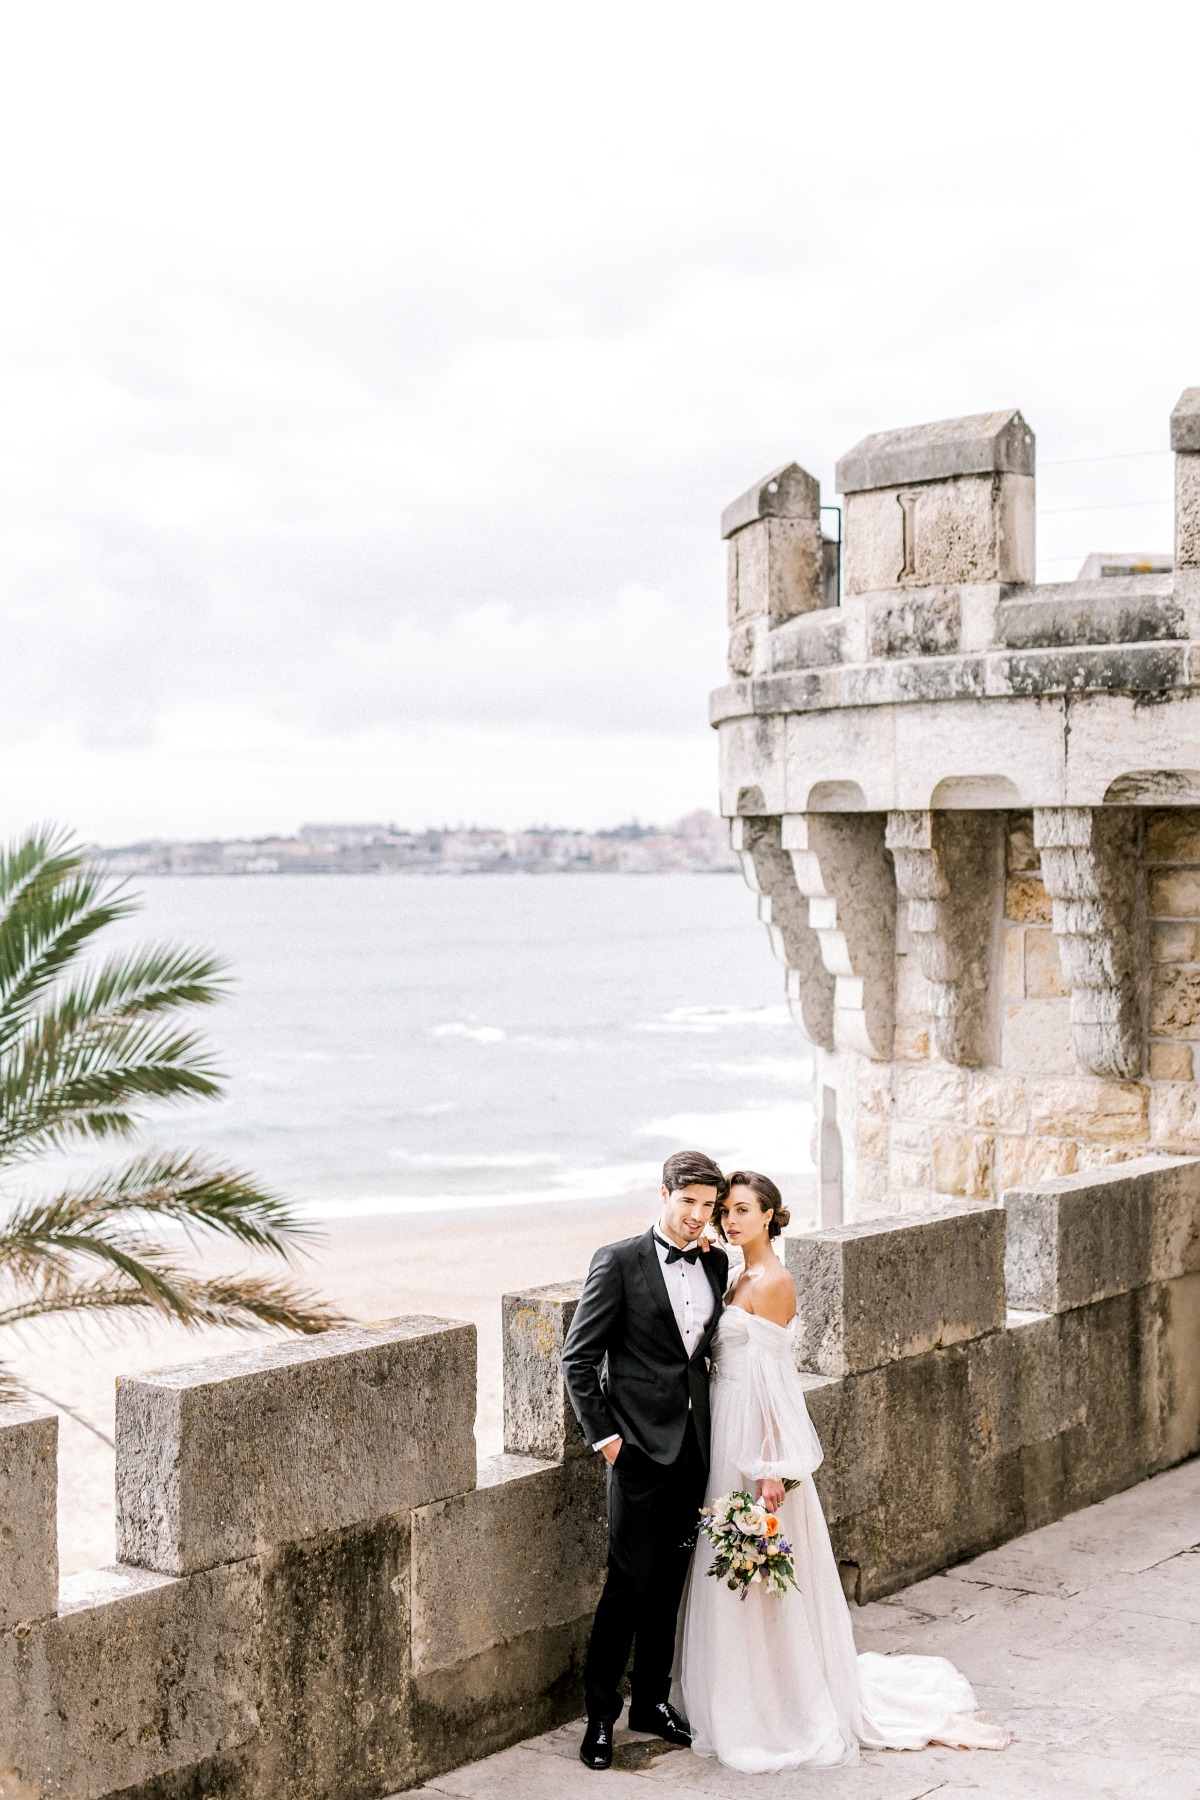 Fairy Tale Castle wedding venue in Portugal on the Ocean